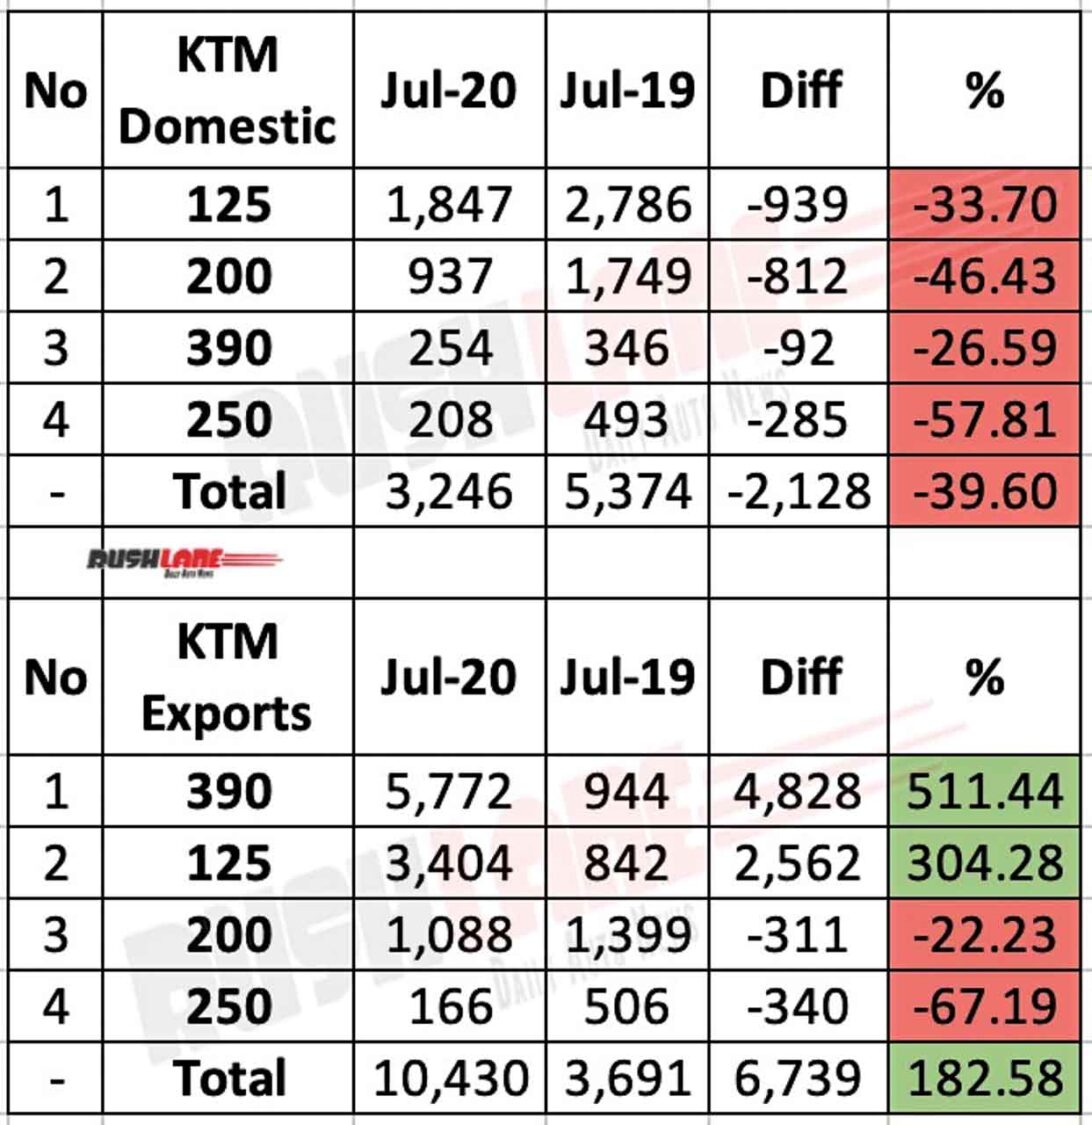 KTM India sales, exports - July 2020